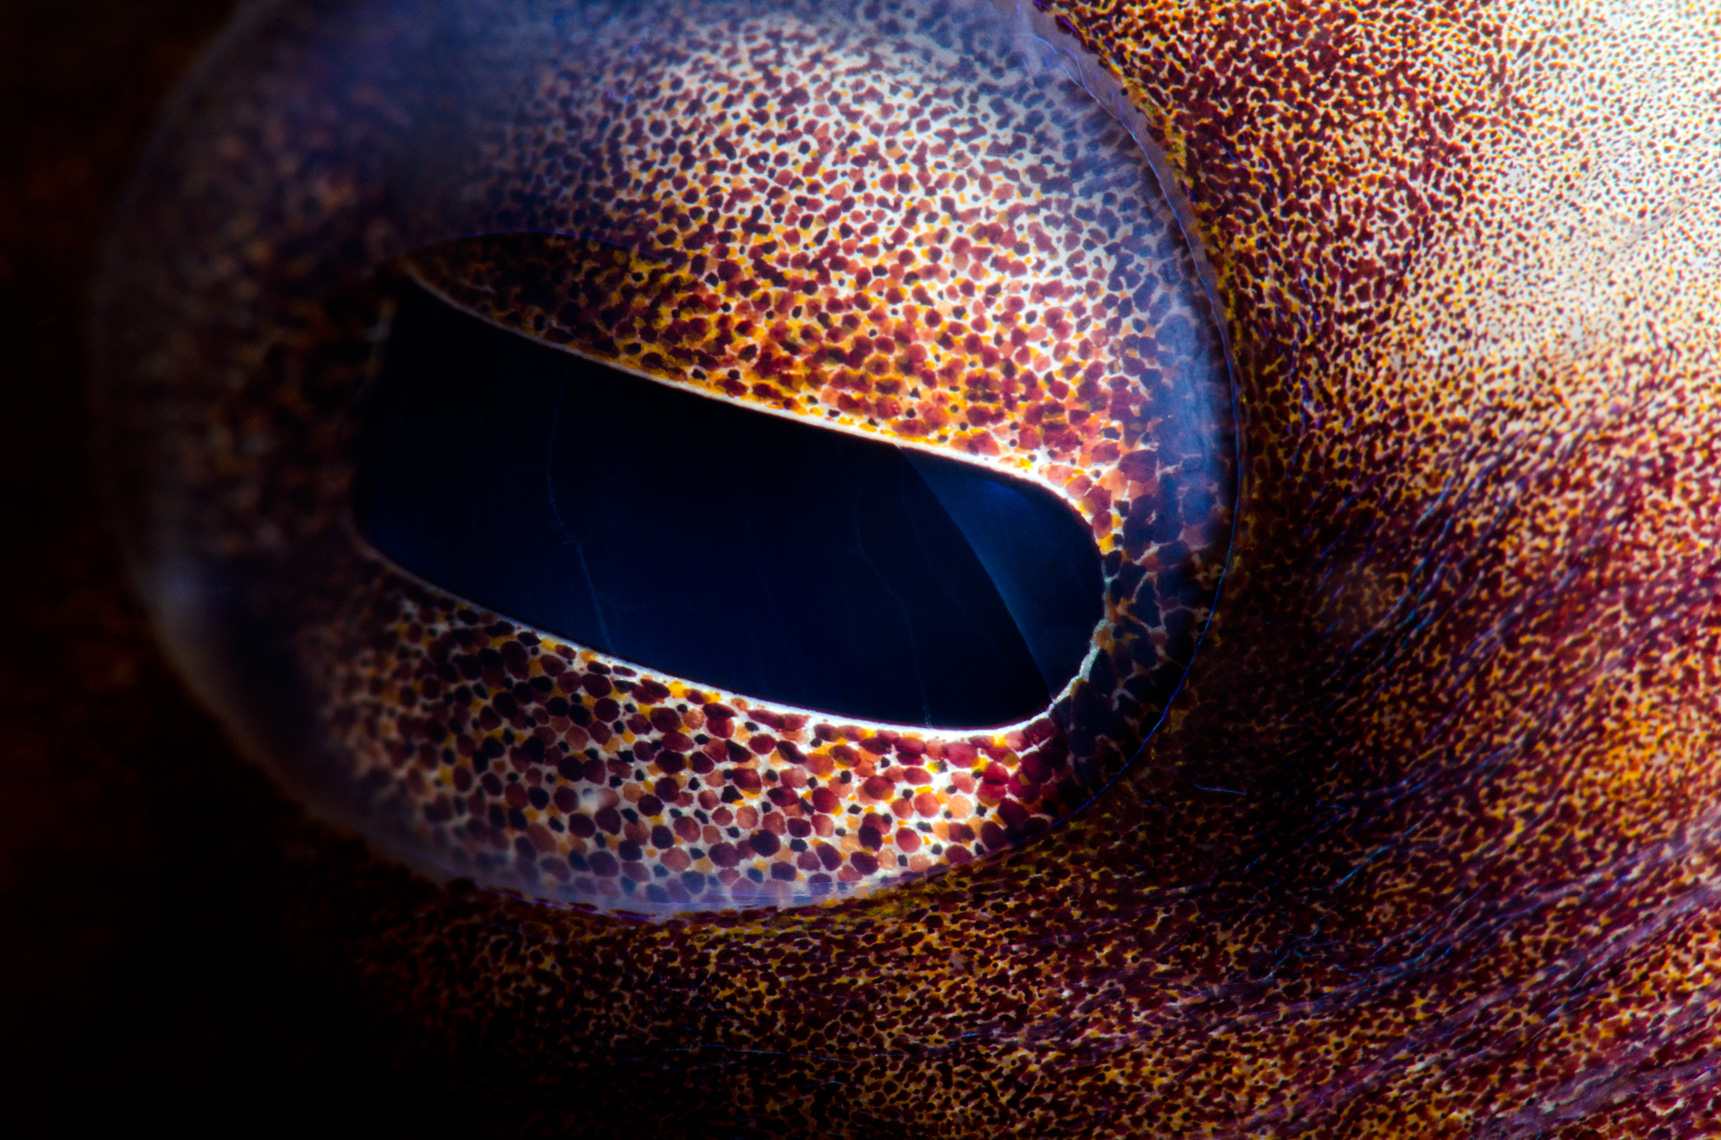 Florida - common octopus eye detail close-up